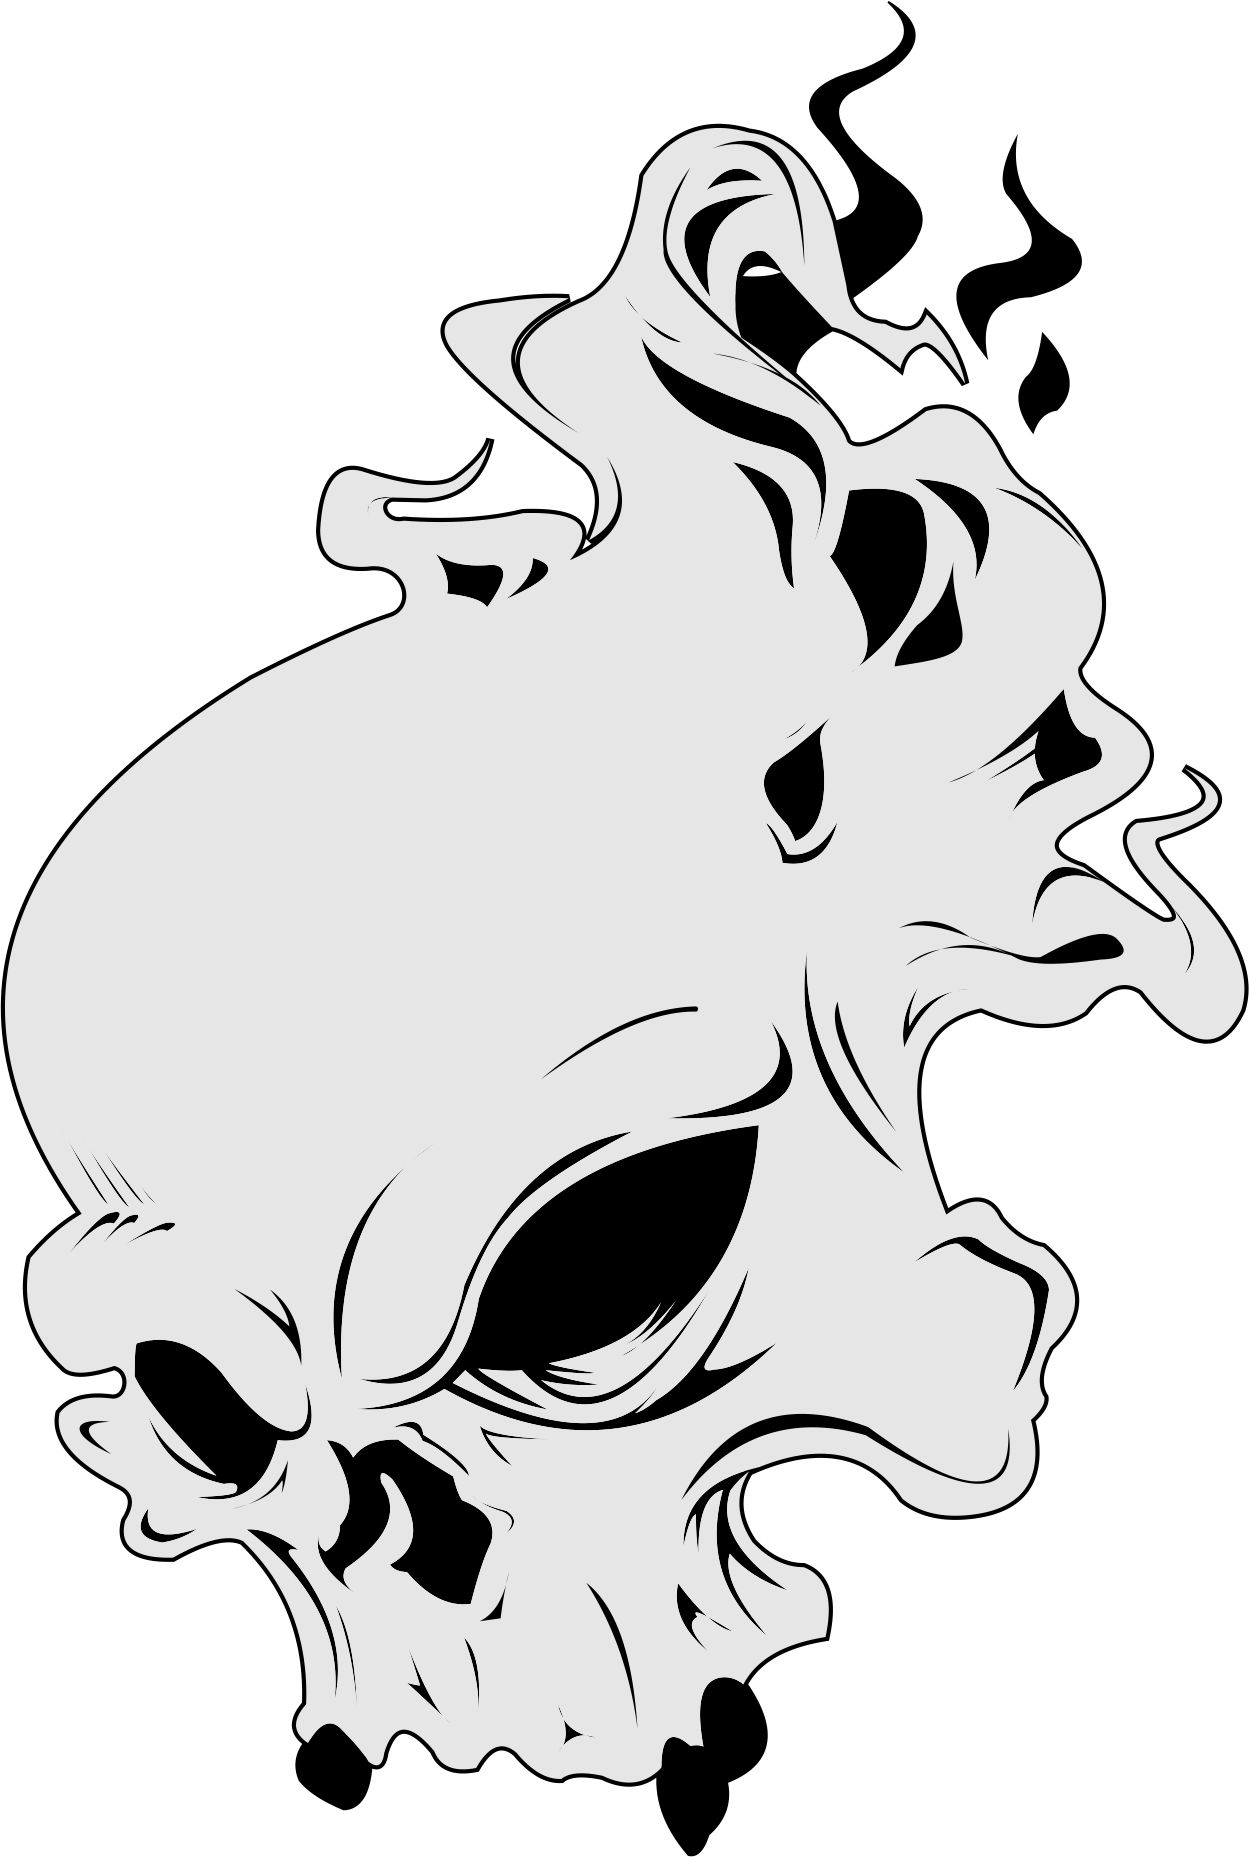 Skull Stencil, Stencil Art, Skull Art, Stencils, Stencil - Stencils Airbrush Harley Davidson (1249x1857)